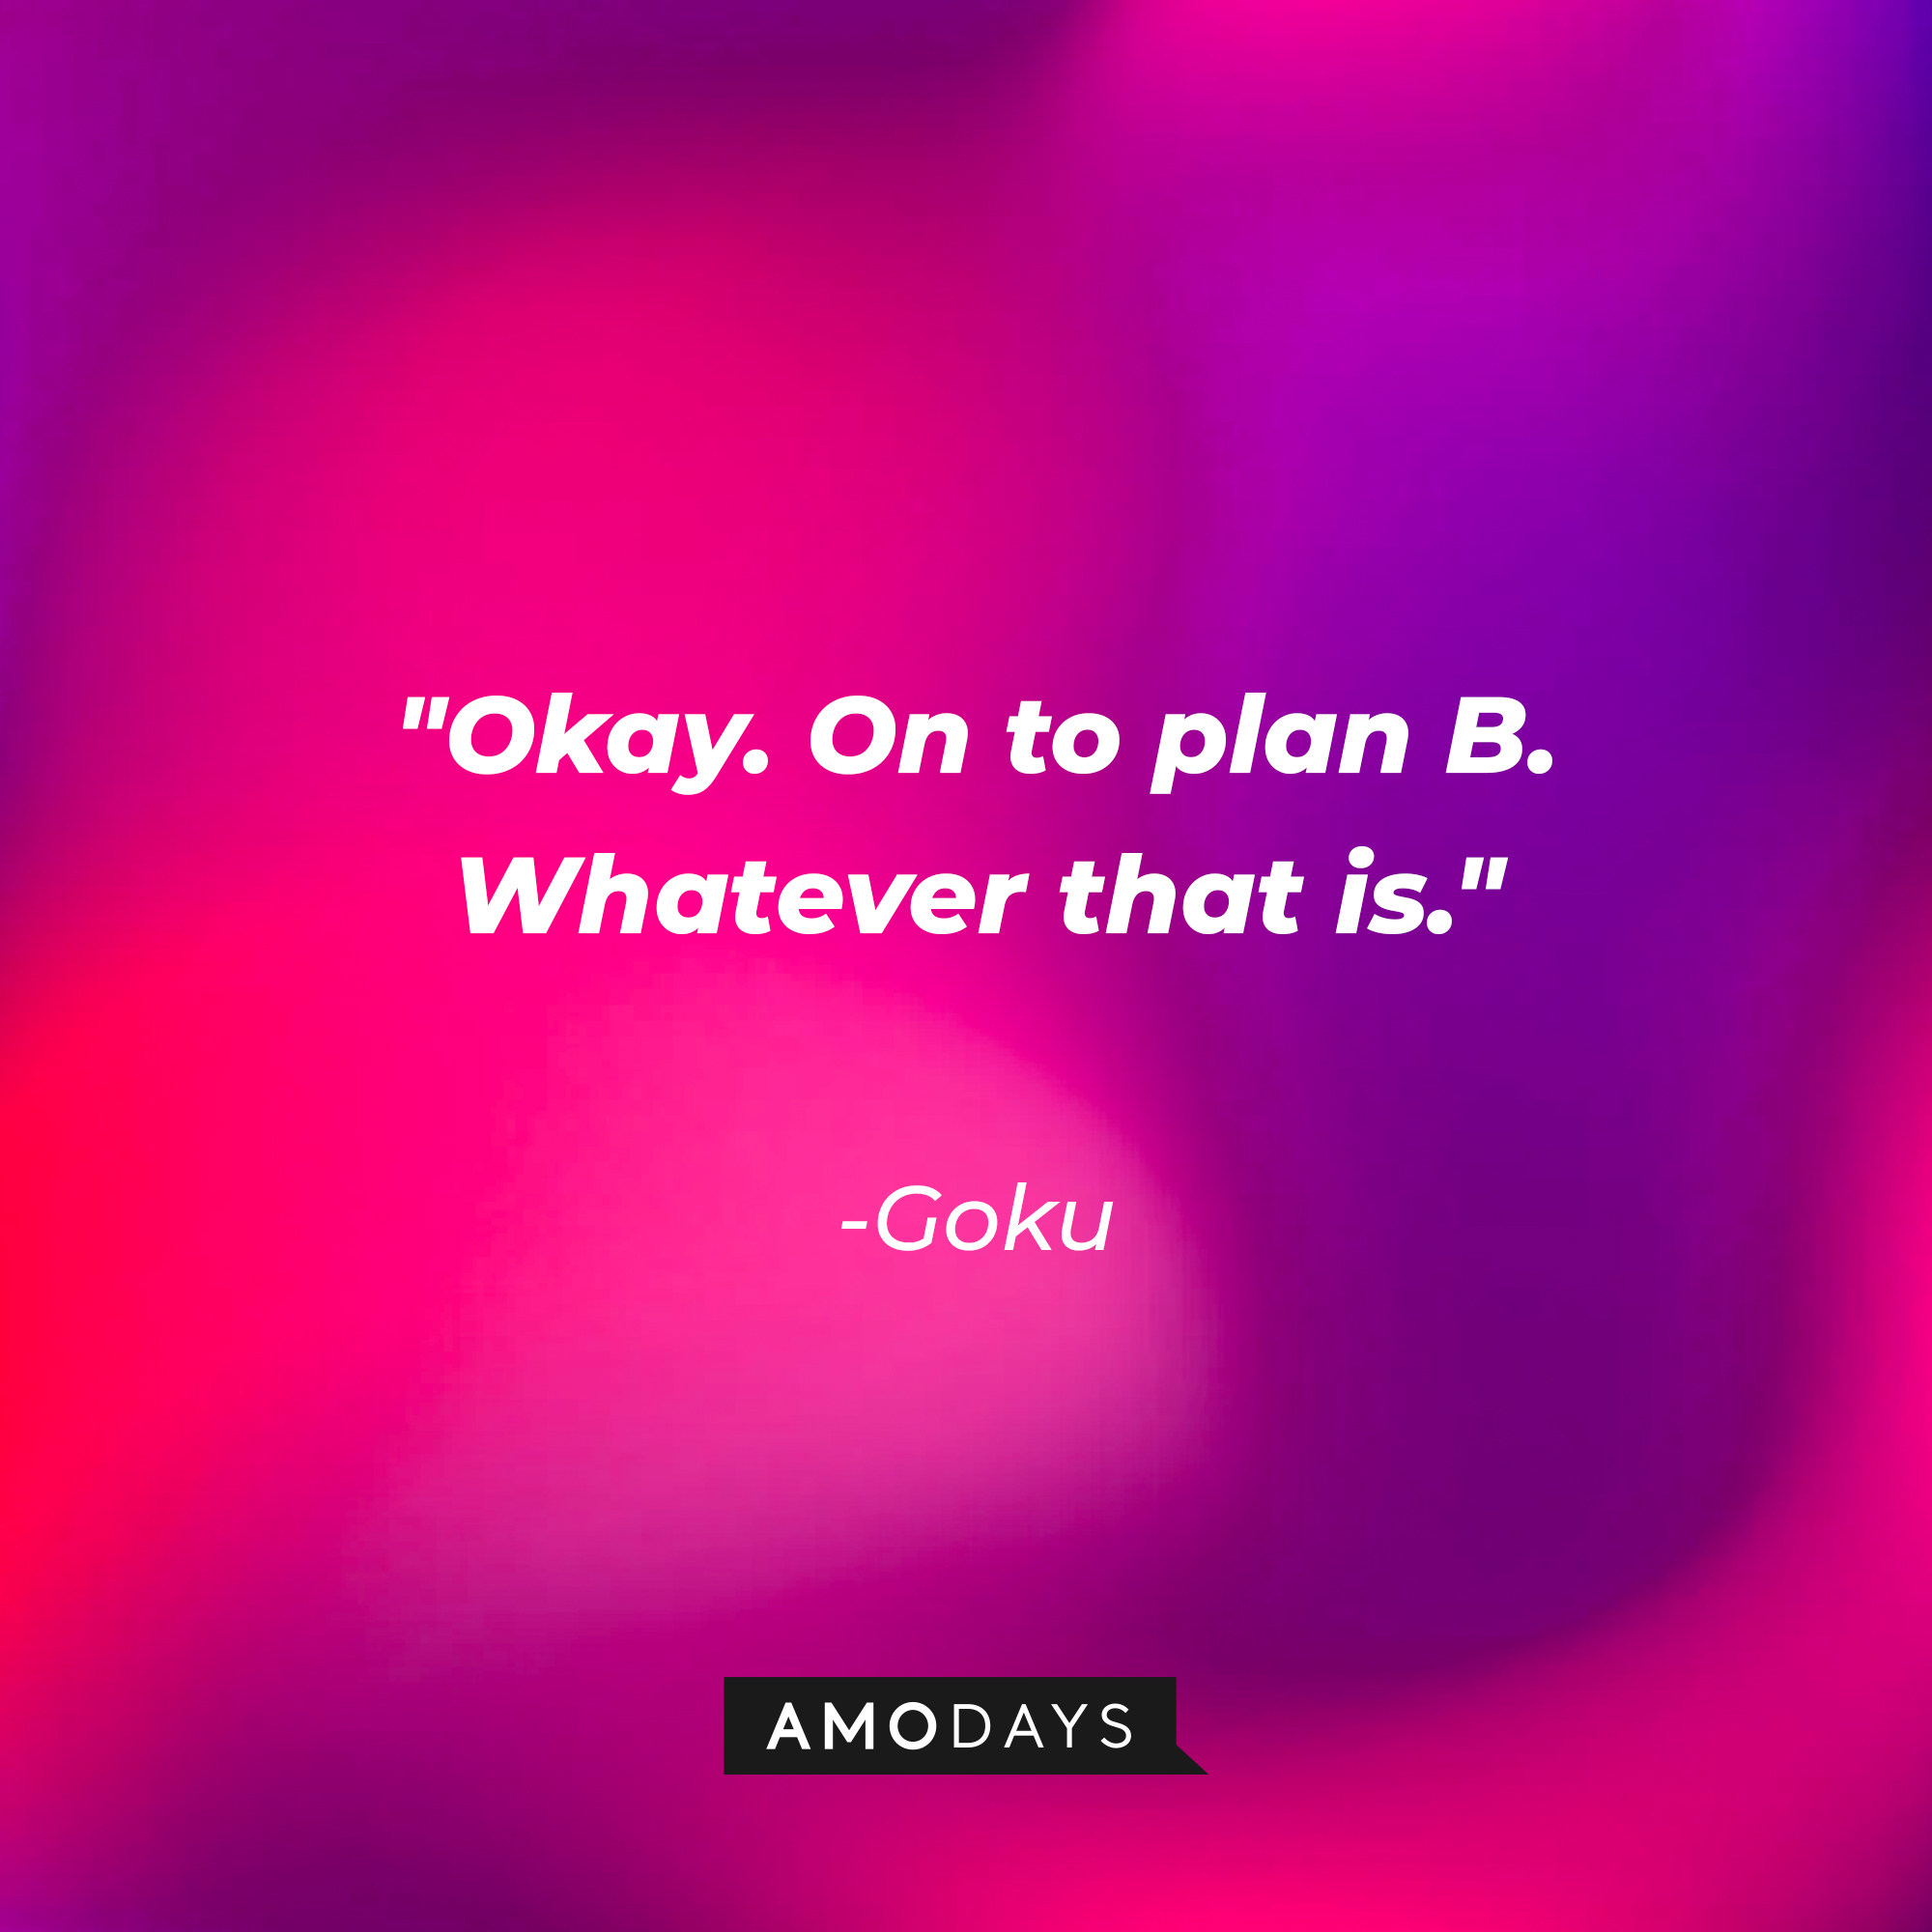 Goku's quote: "Okay. On to plan B. Whatever that is." | Source: youtube.com/DragonballBlack